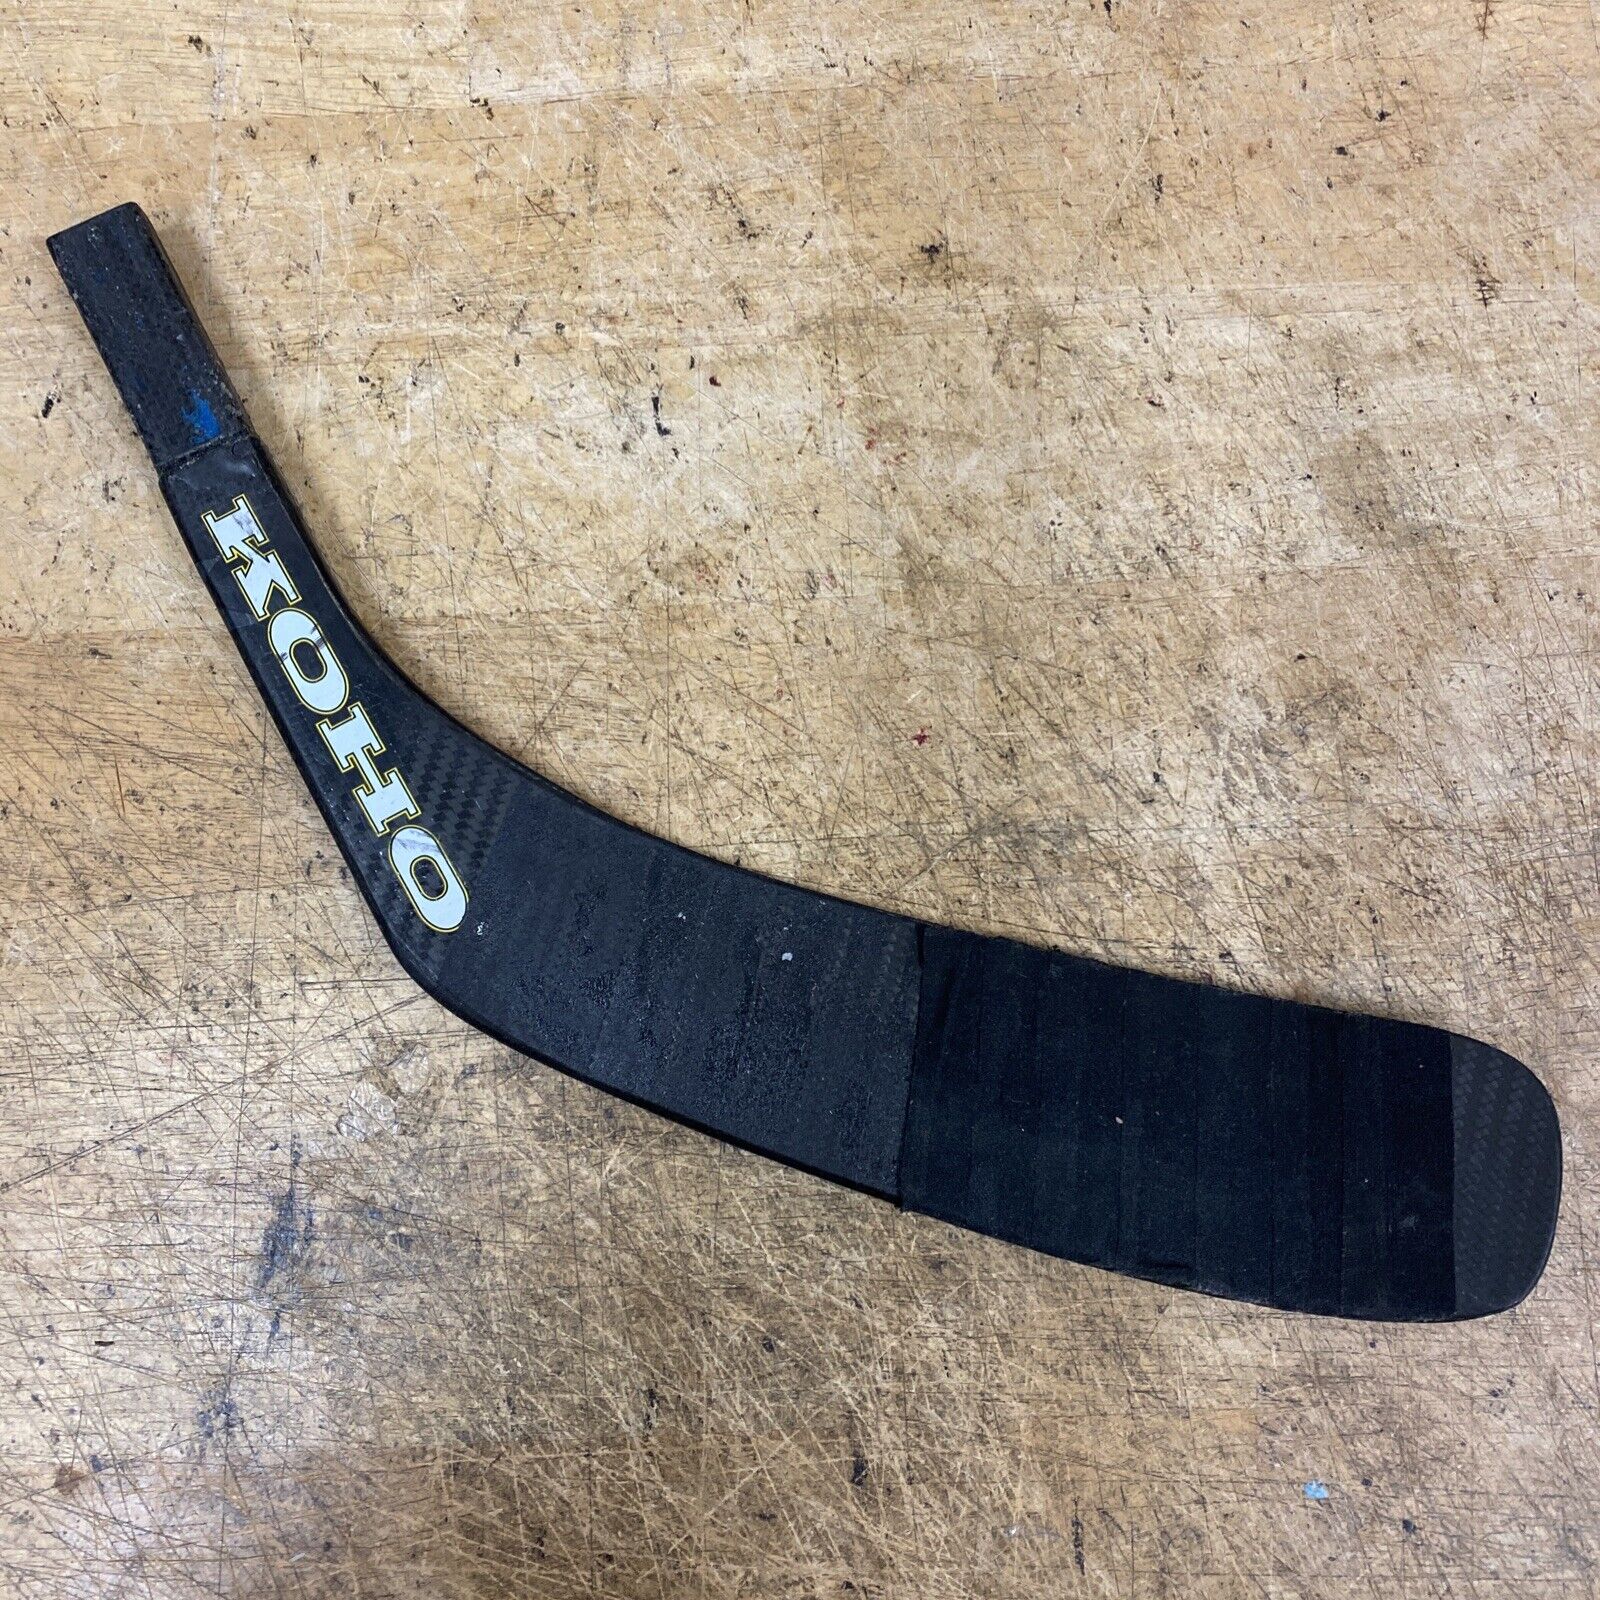 Nhl Pro Stock Game Used Koho Nordstrom Ice Hockey Blade Left-handed Curve